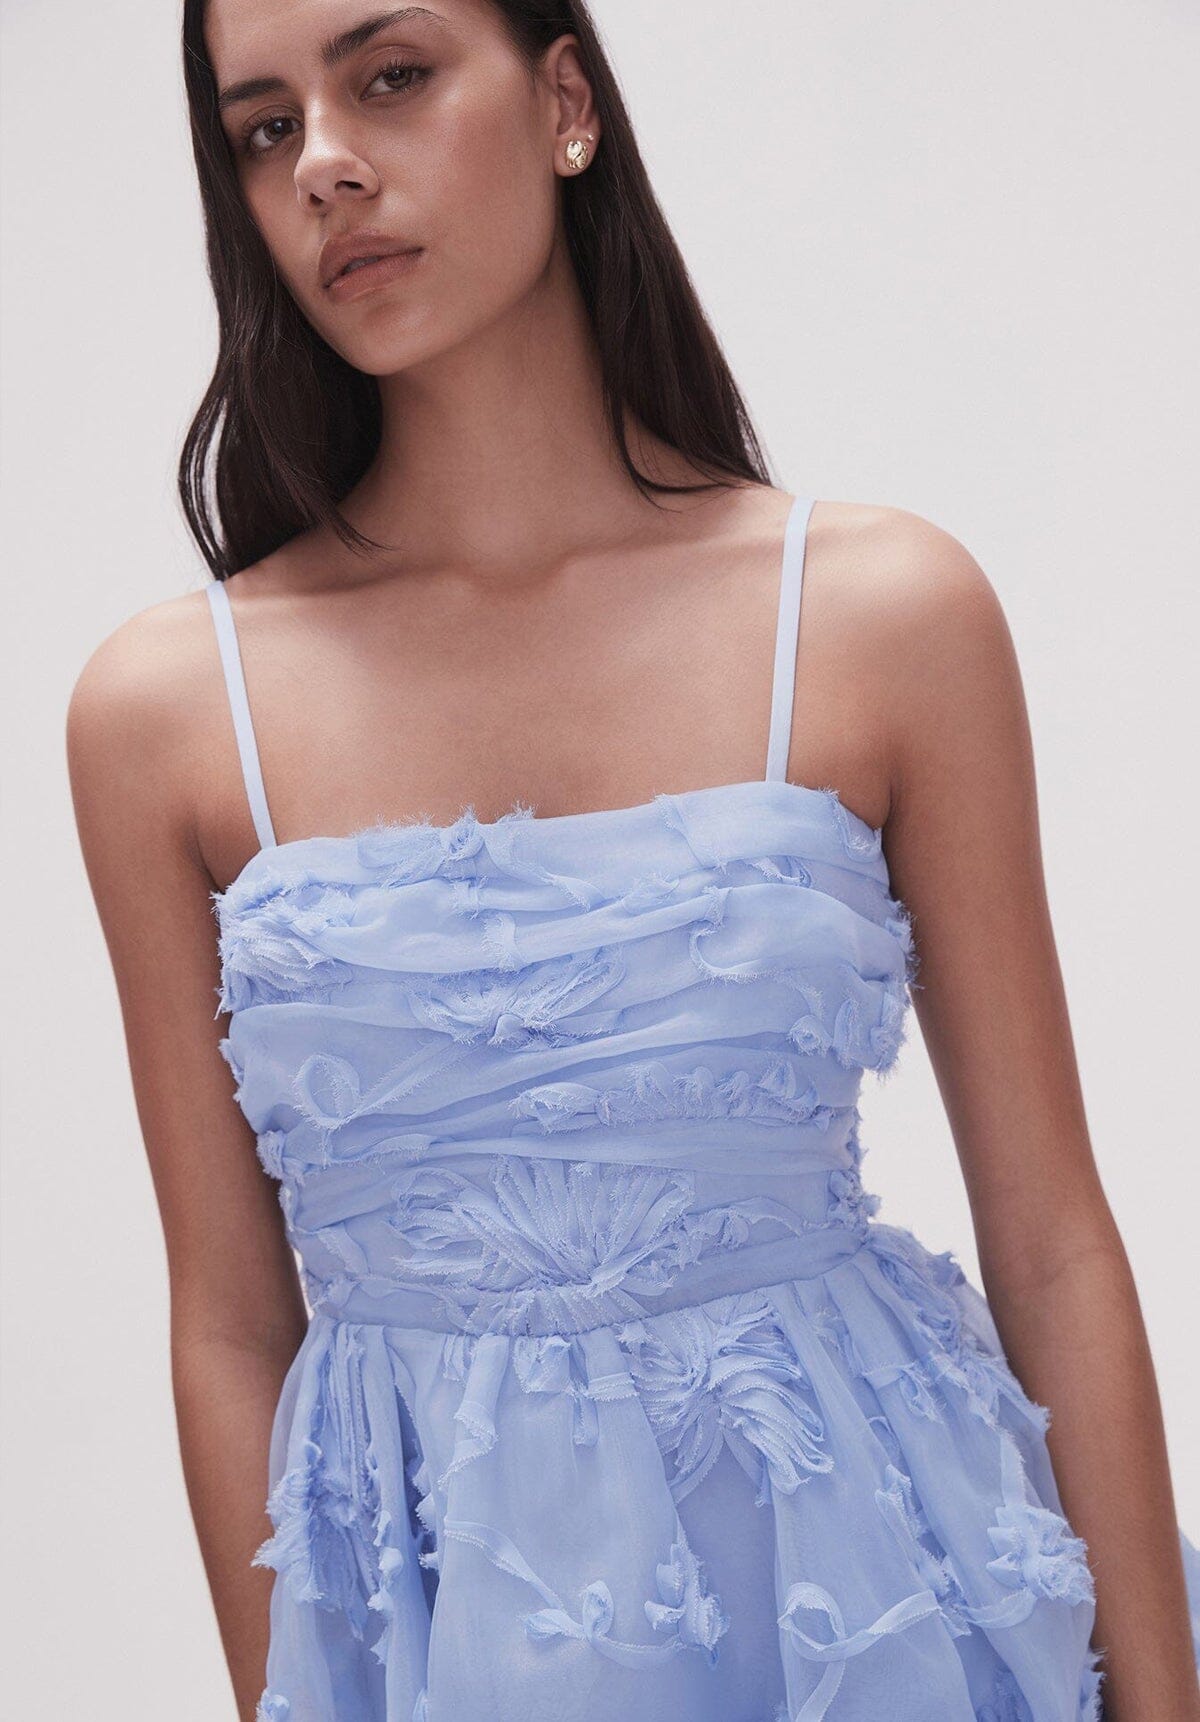 Evangeline Mini Dress Light Blue Clothing Aje 